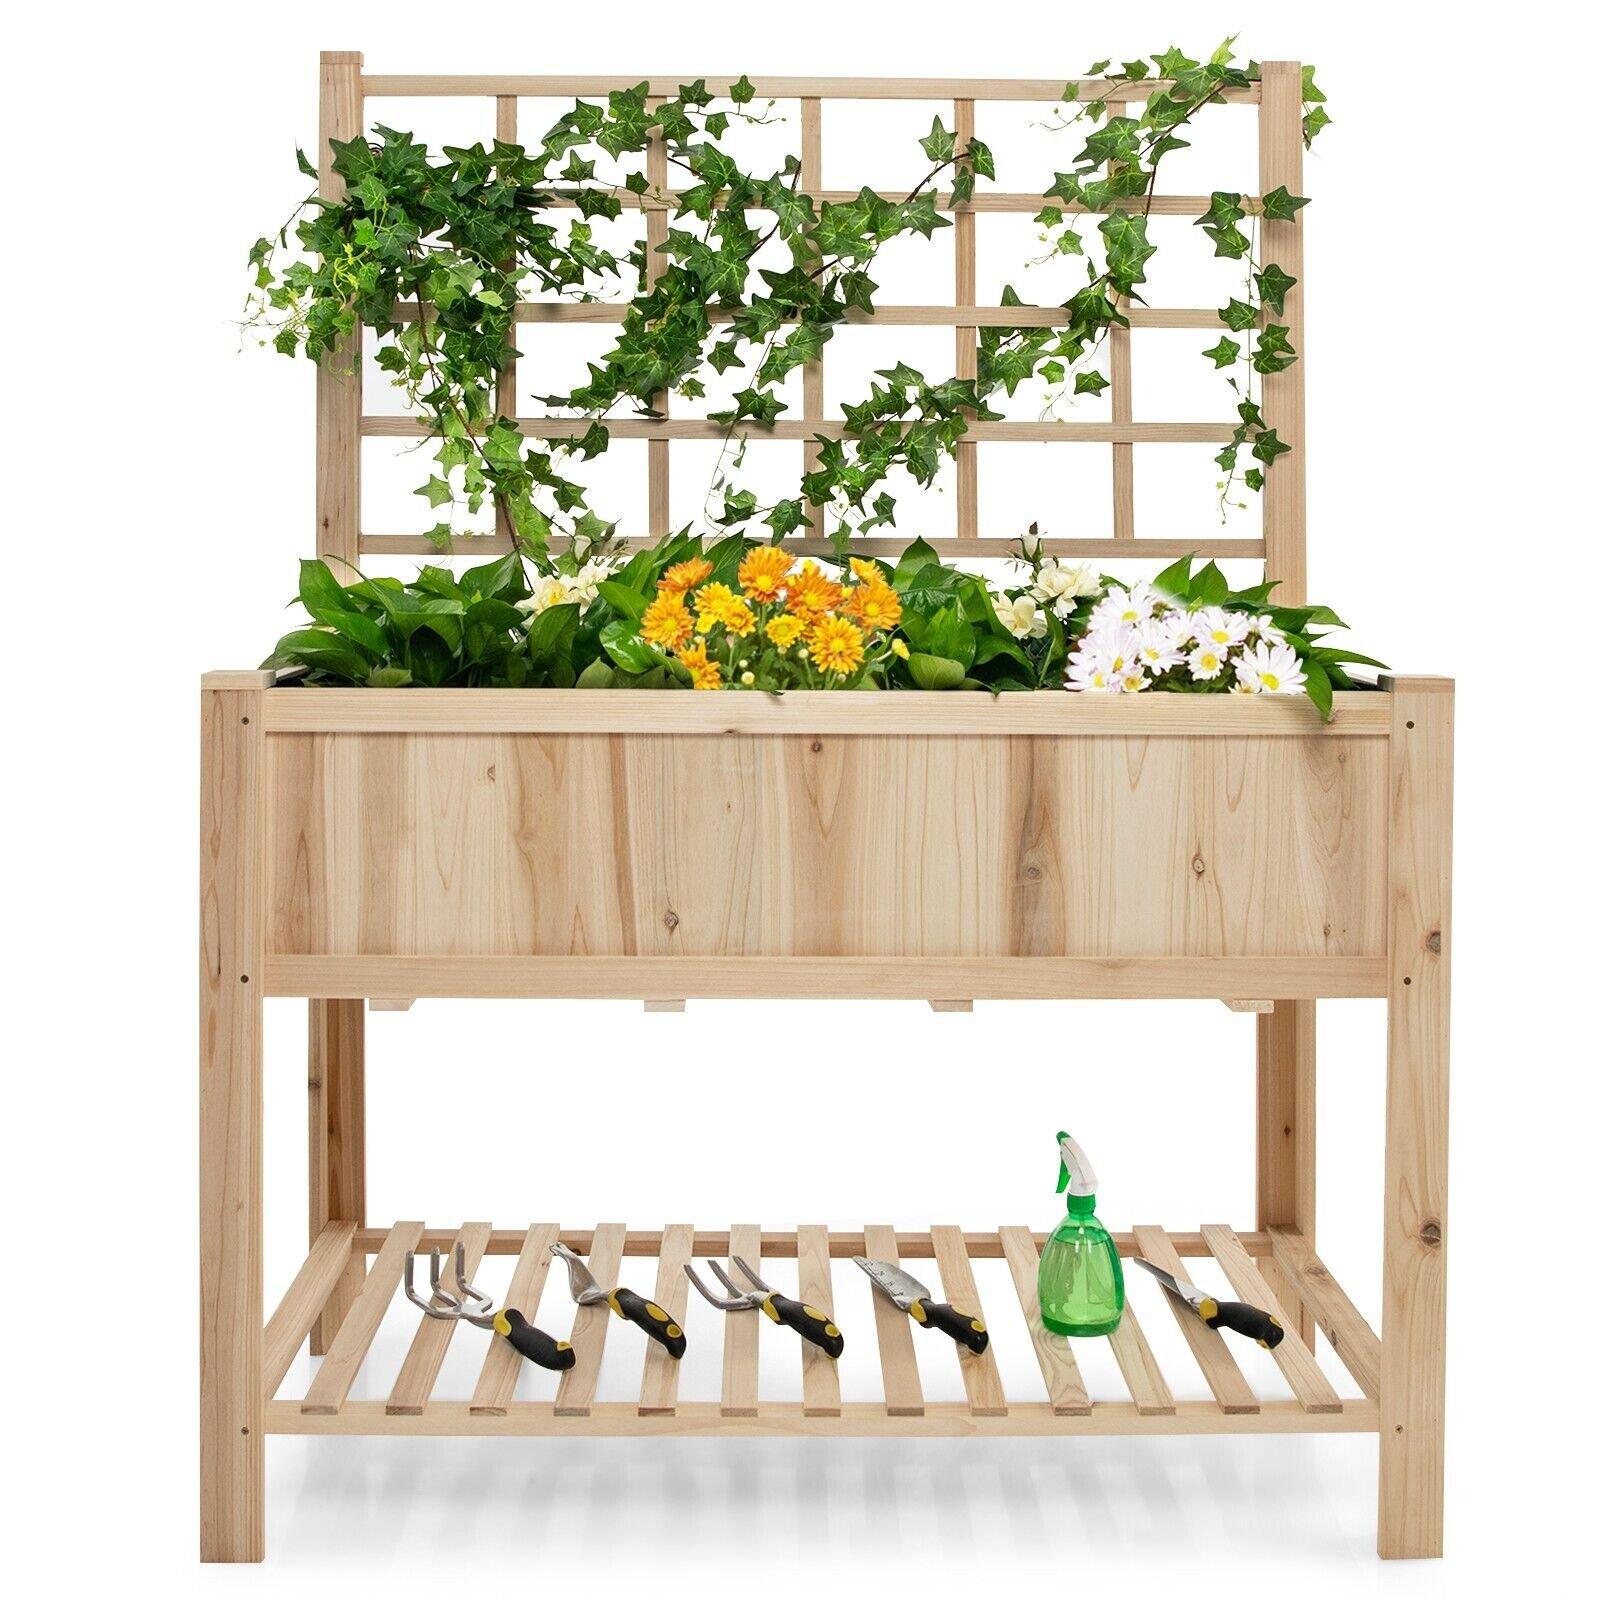 Wooden Planter Elevated Raised Garden Bed with Trellis Wheels & Storage Shelves